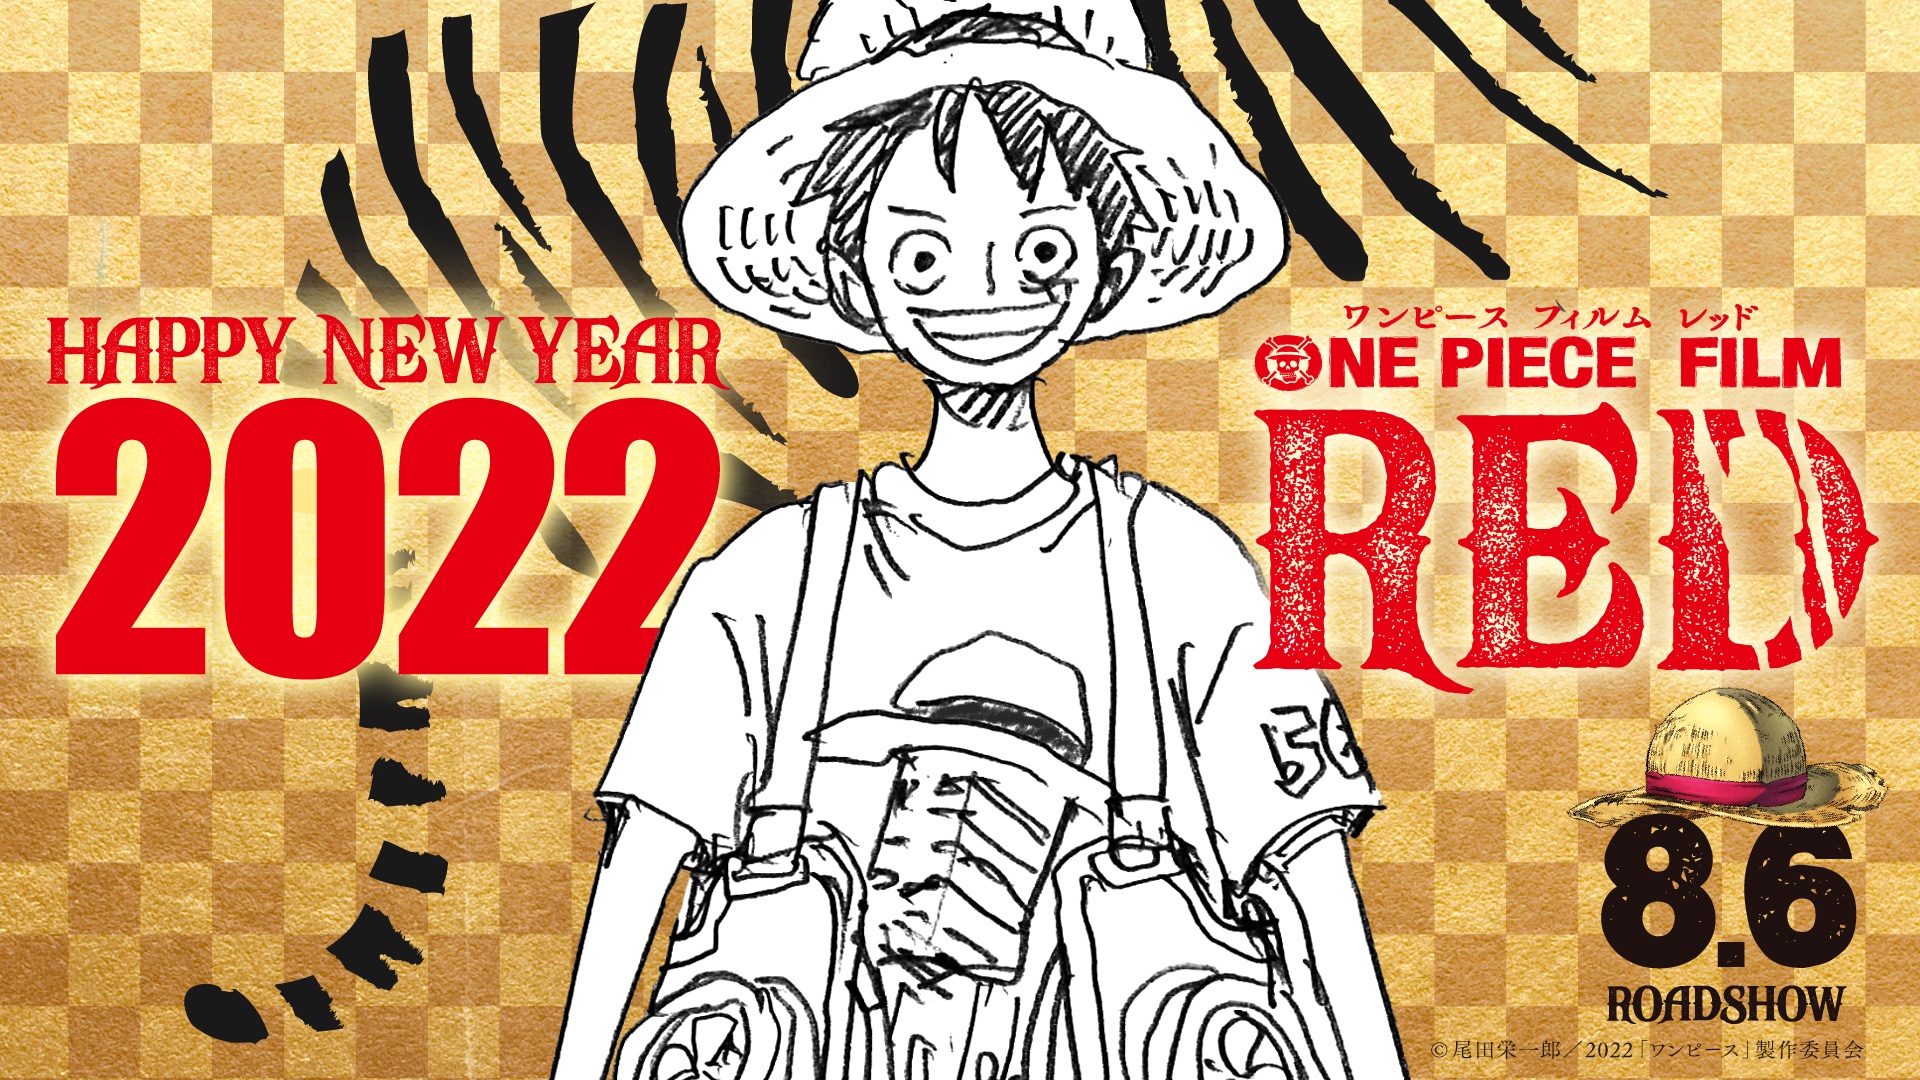 One Piece Film Red 公式 Op Filmred Twitter